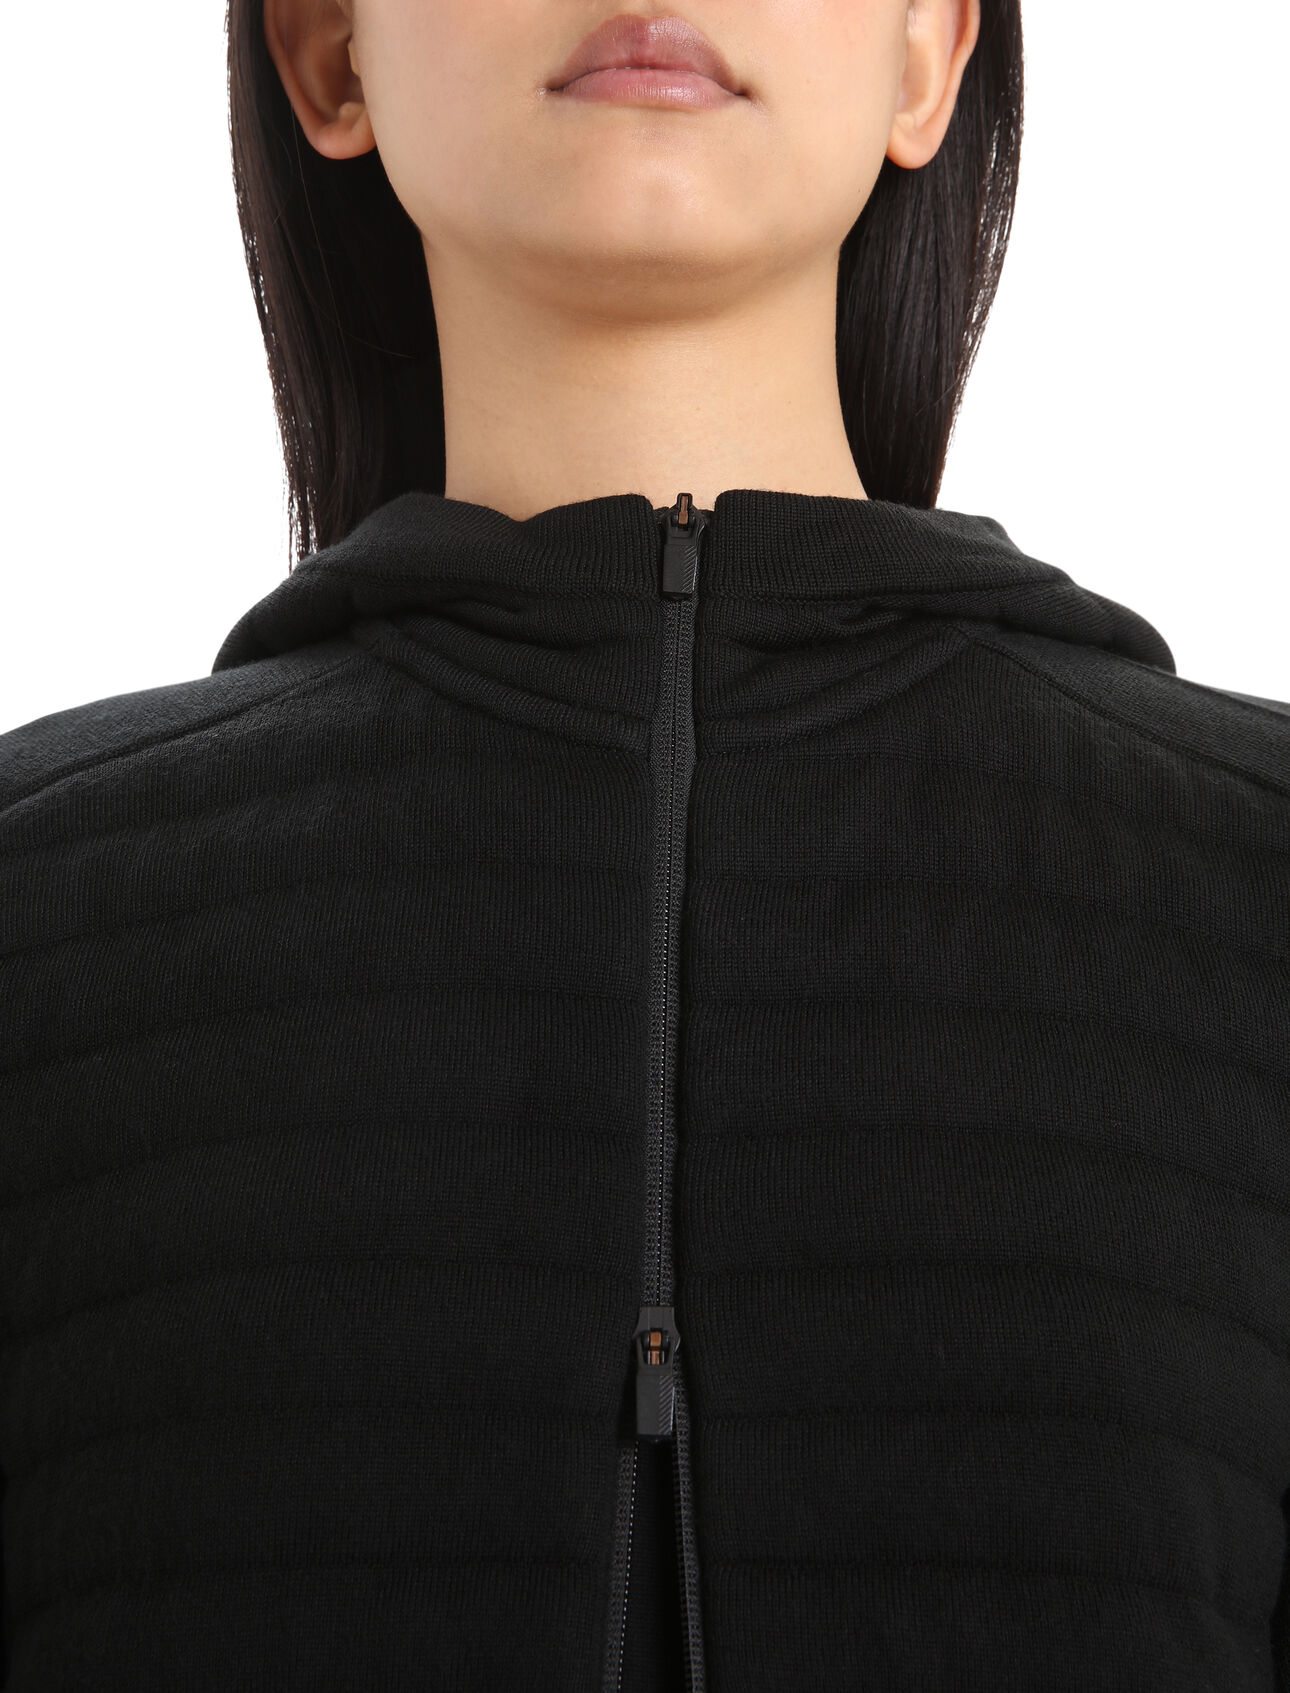 Icebreaker Women's ZoneKnit Insulated Long Sleeve Zip Hoodie